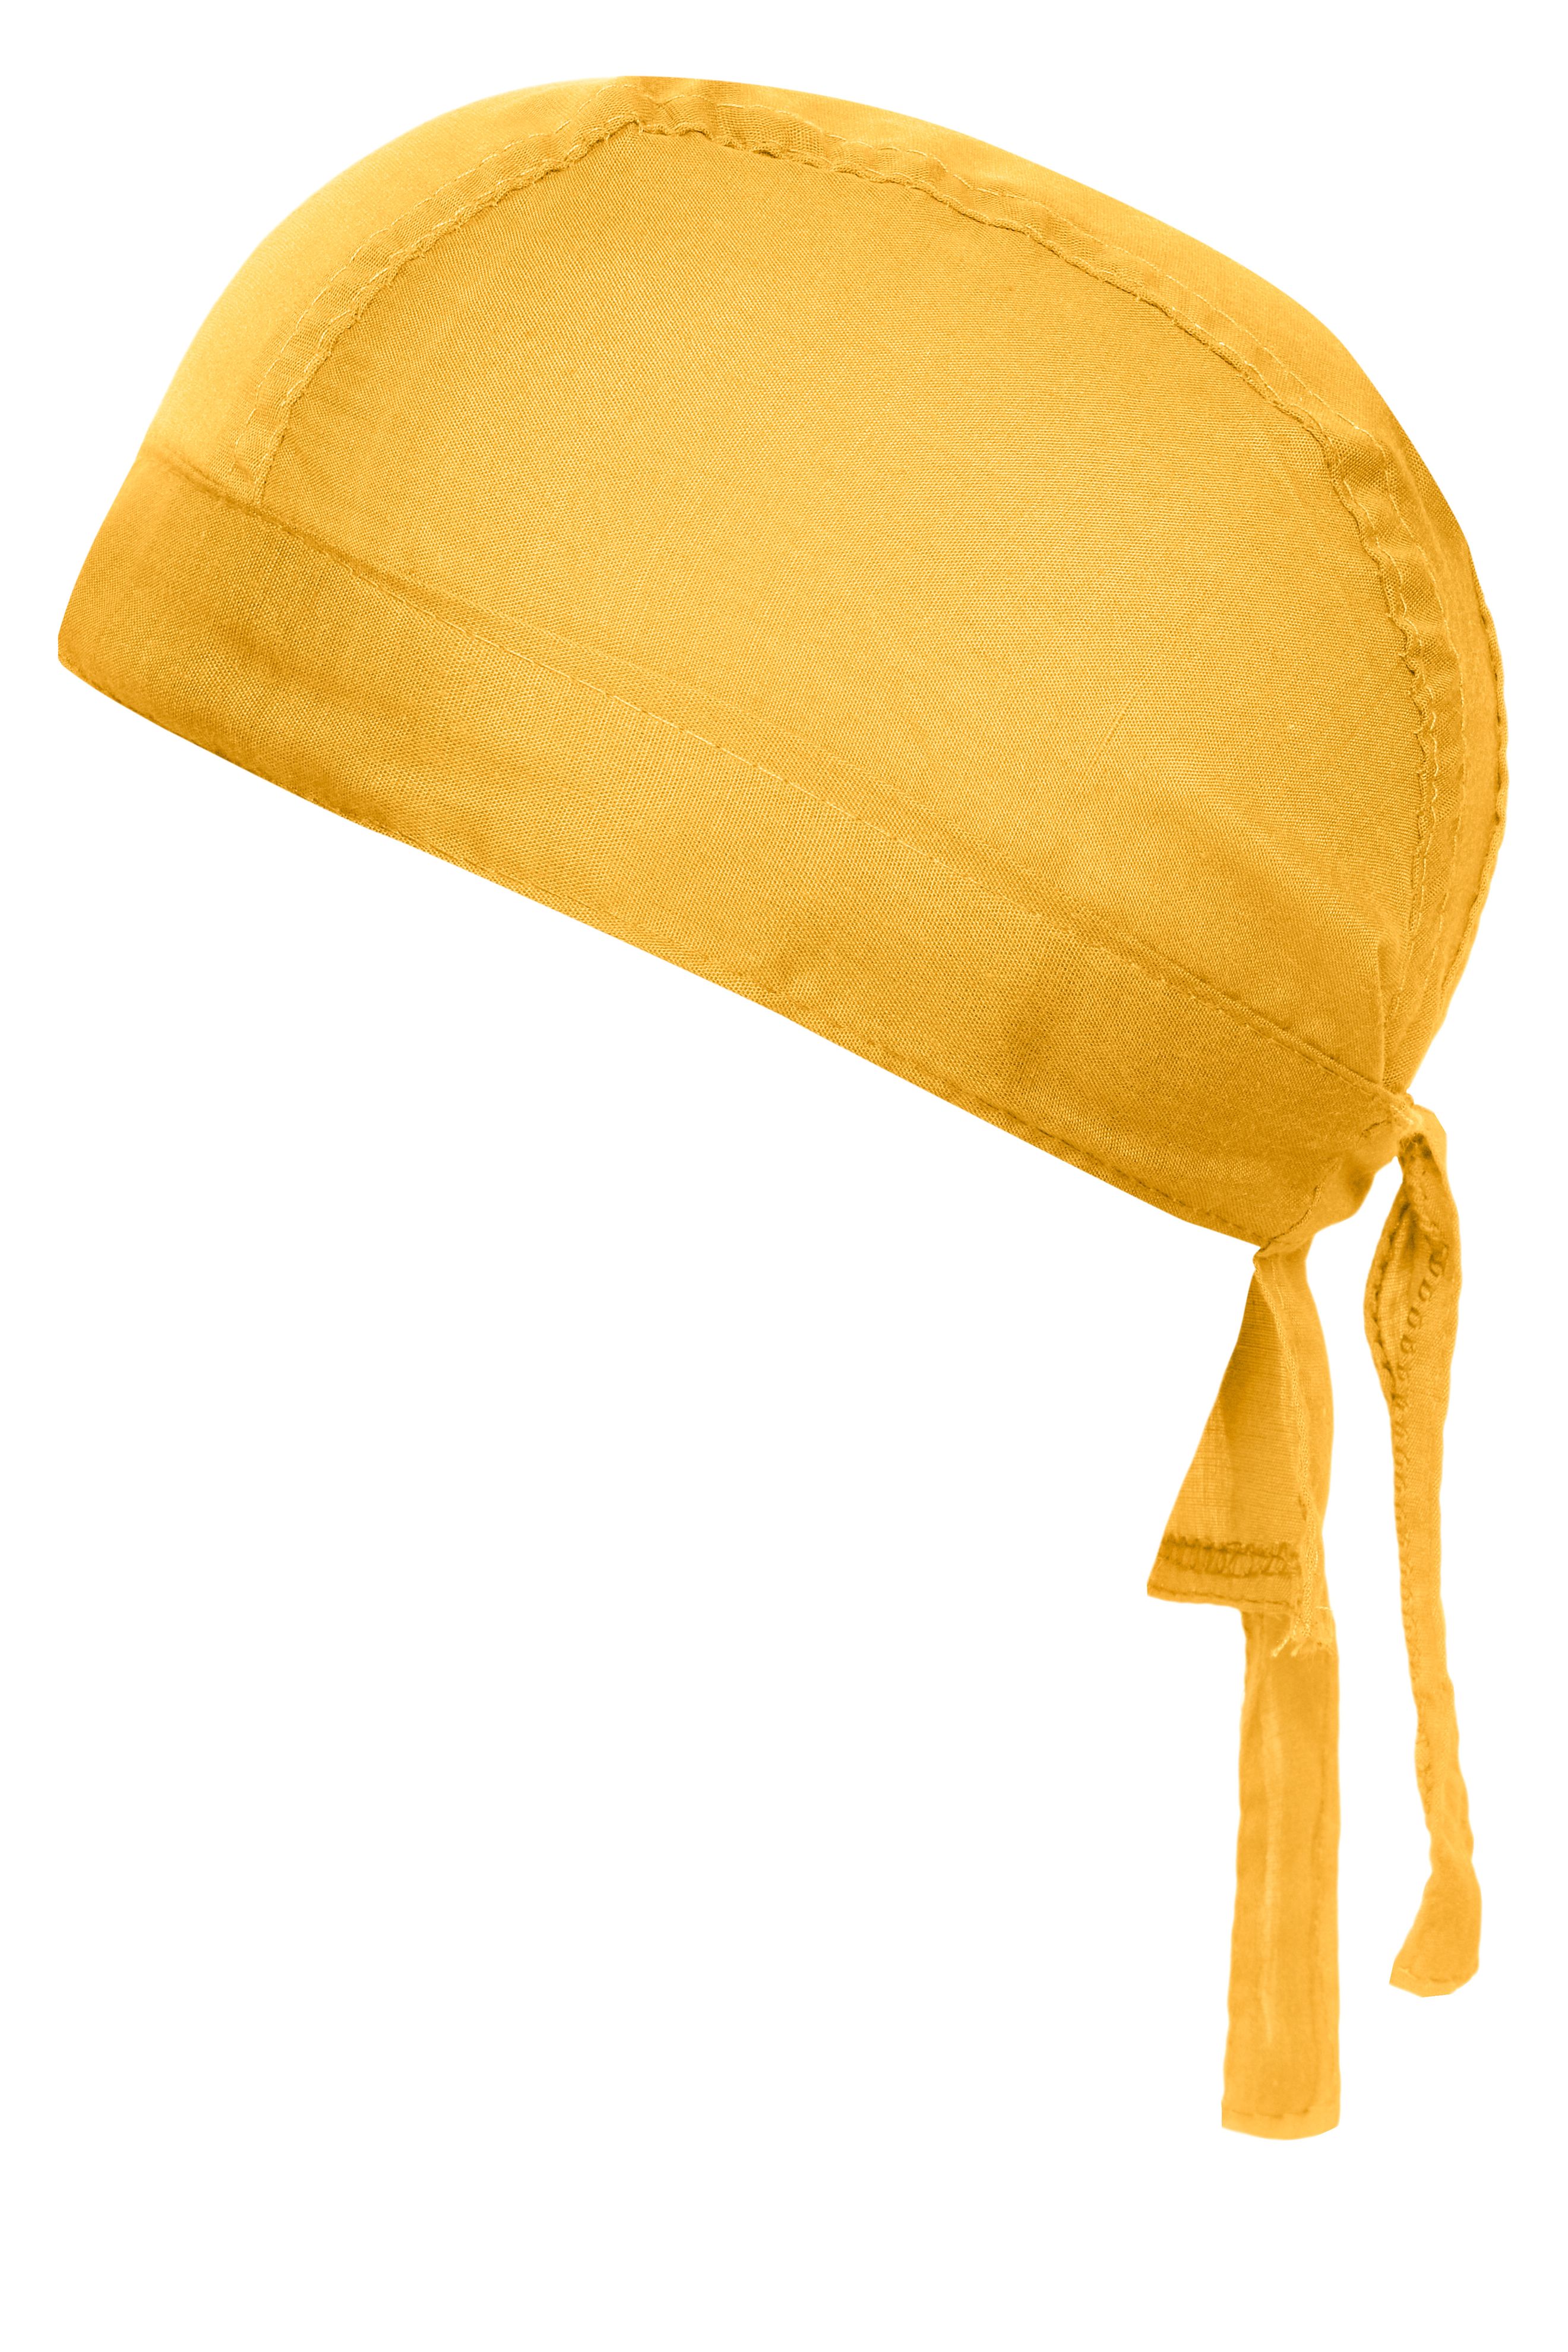 Bandana Hat MB041 Trendiges Kopftuch